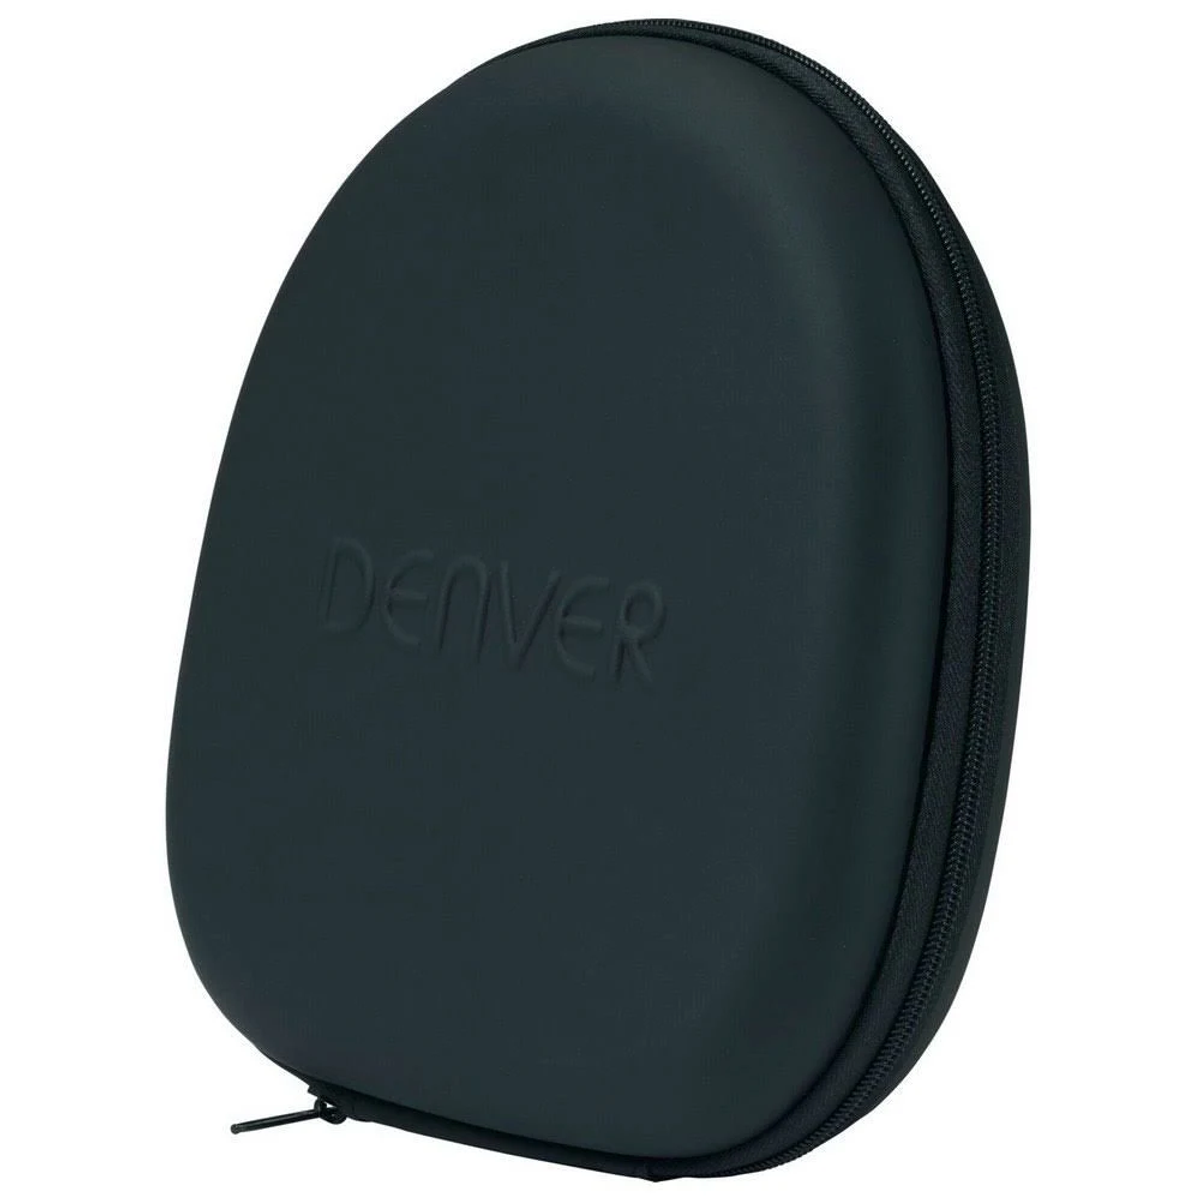 DENVER ELECTRONICS Creme Bluetooth Over-ear BTN207SILVER, Kopfhörer Bluetooth